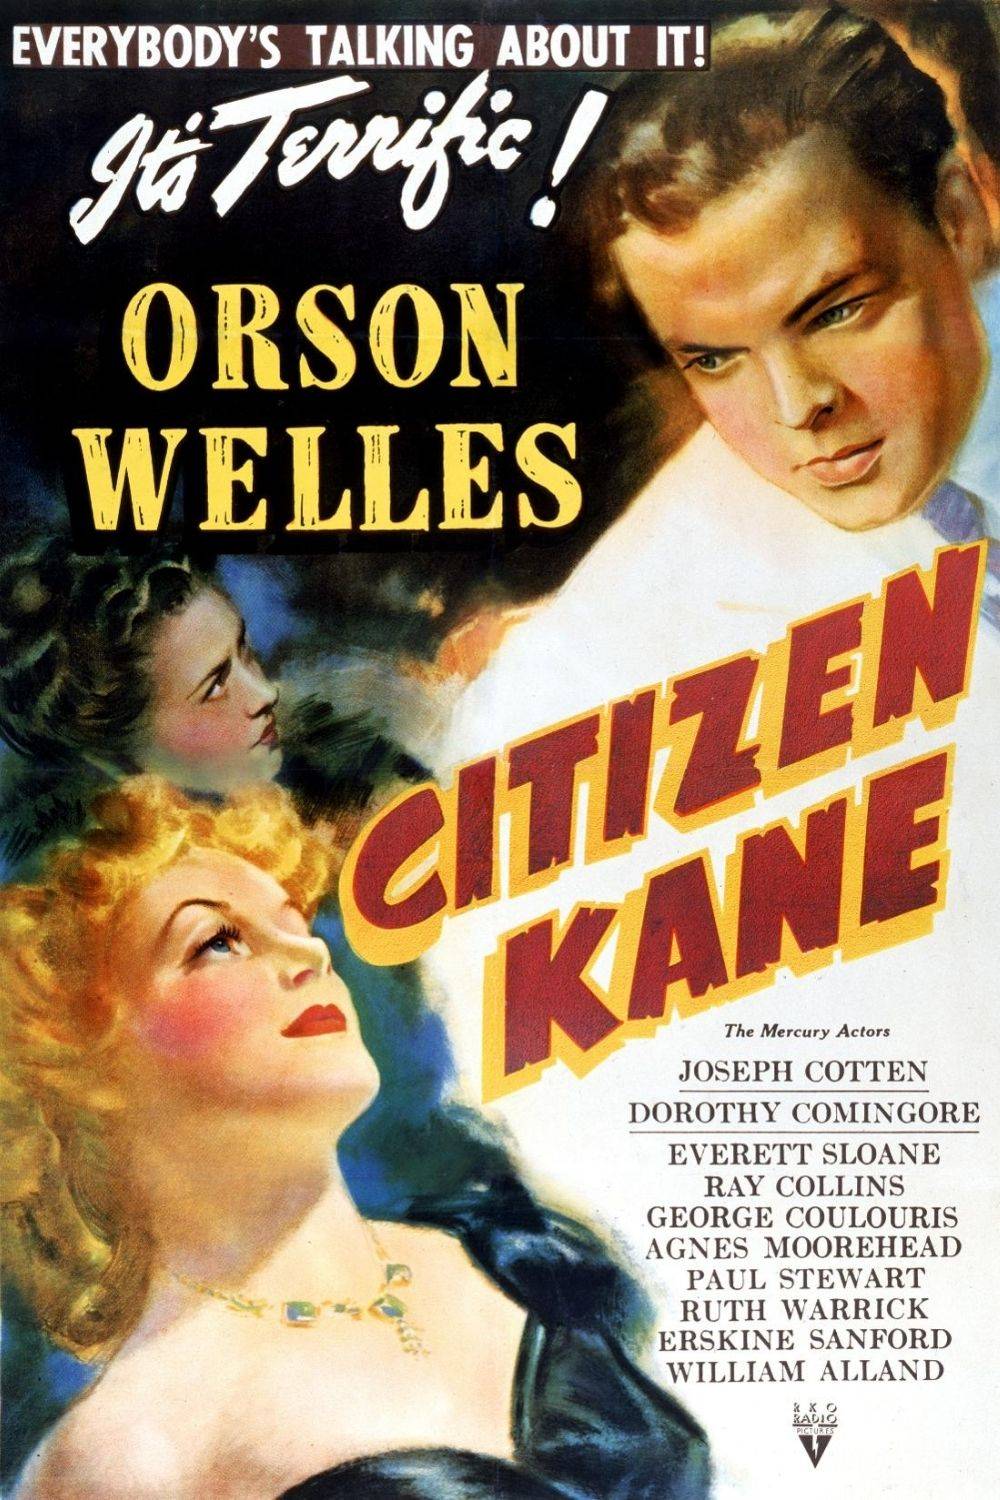 Ciudadano Kane (1941)